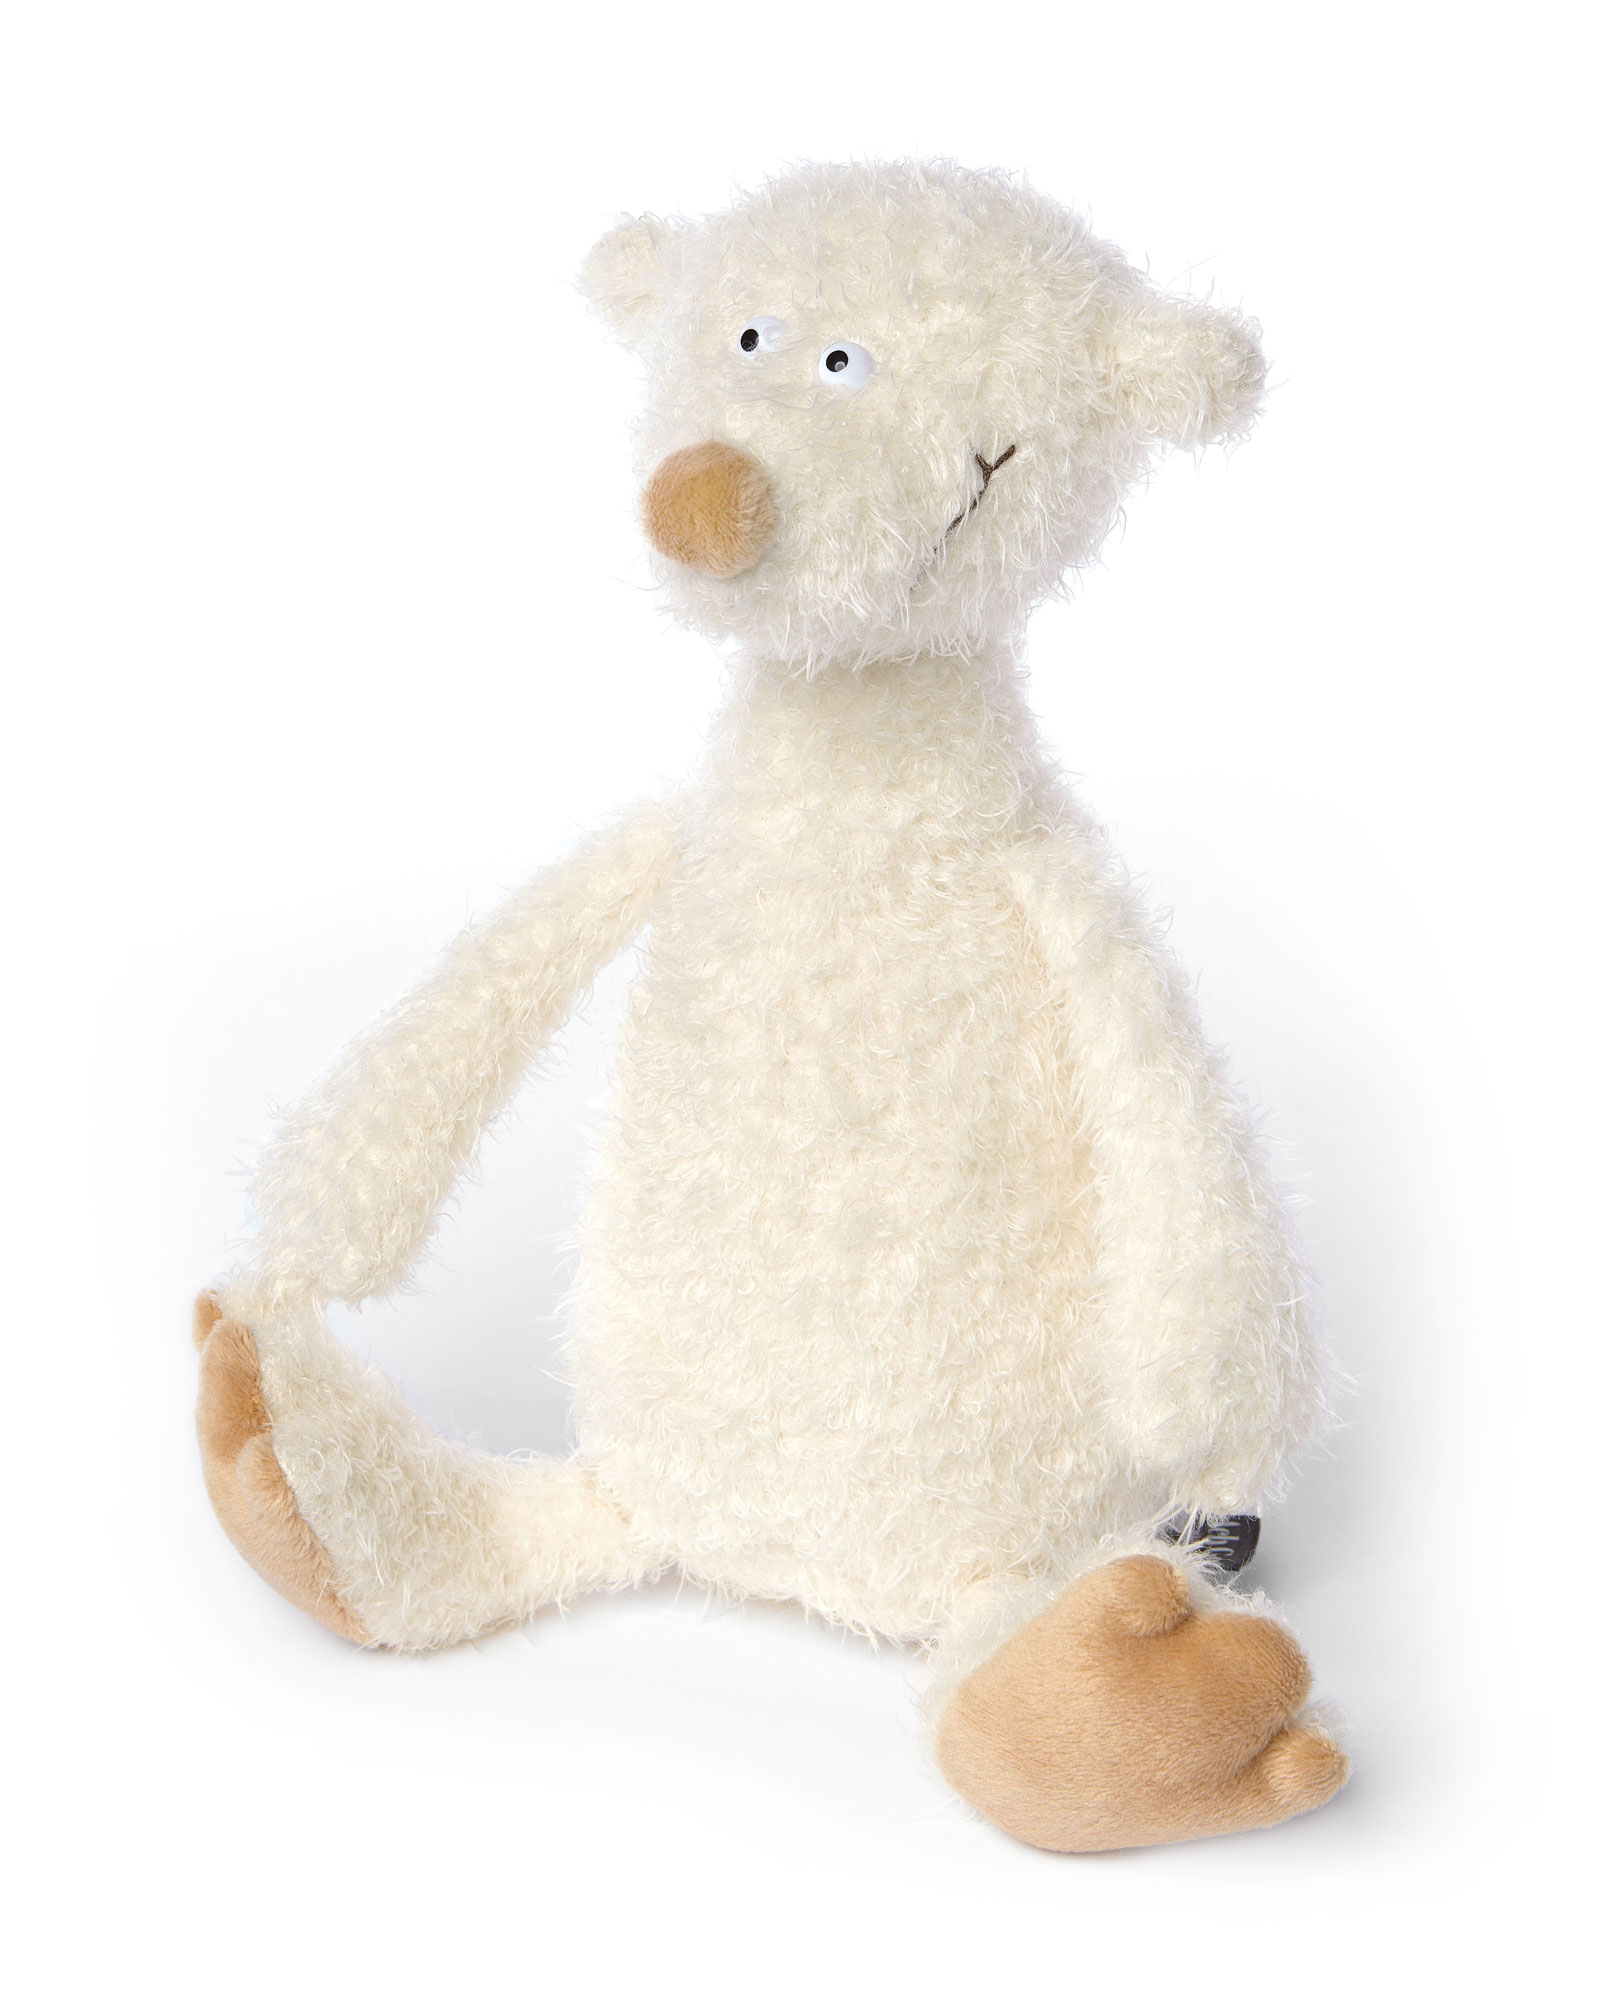 Plush toy bear midi cream white, Ach Good! Beasts